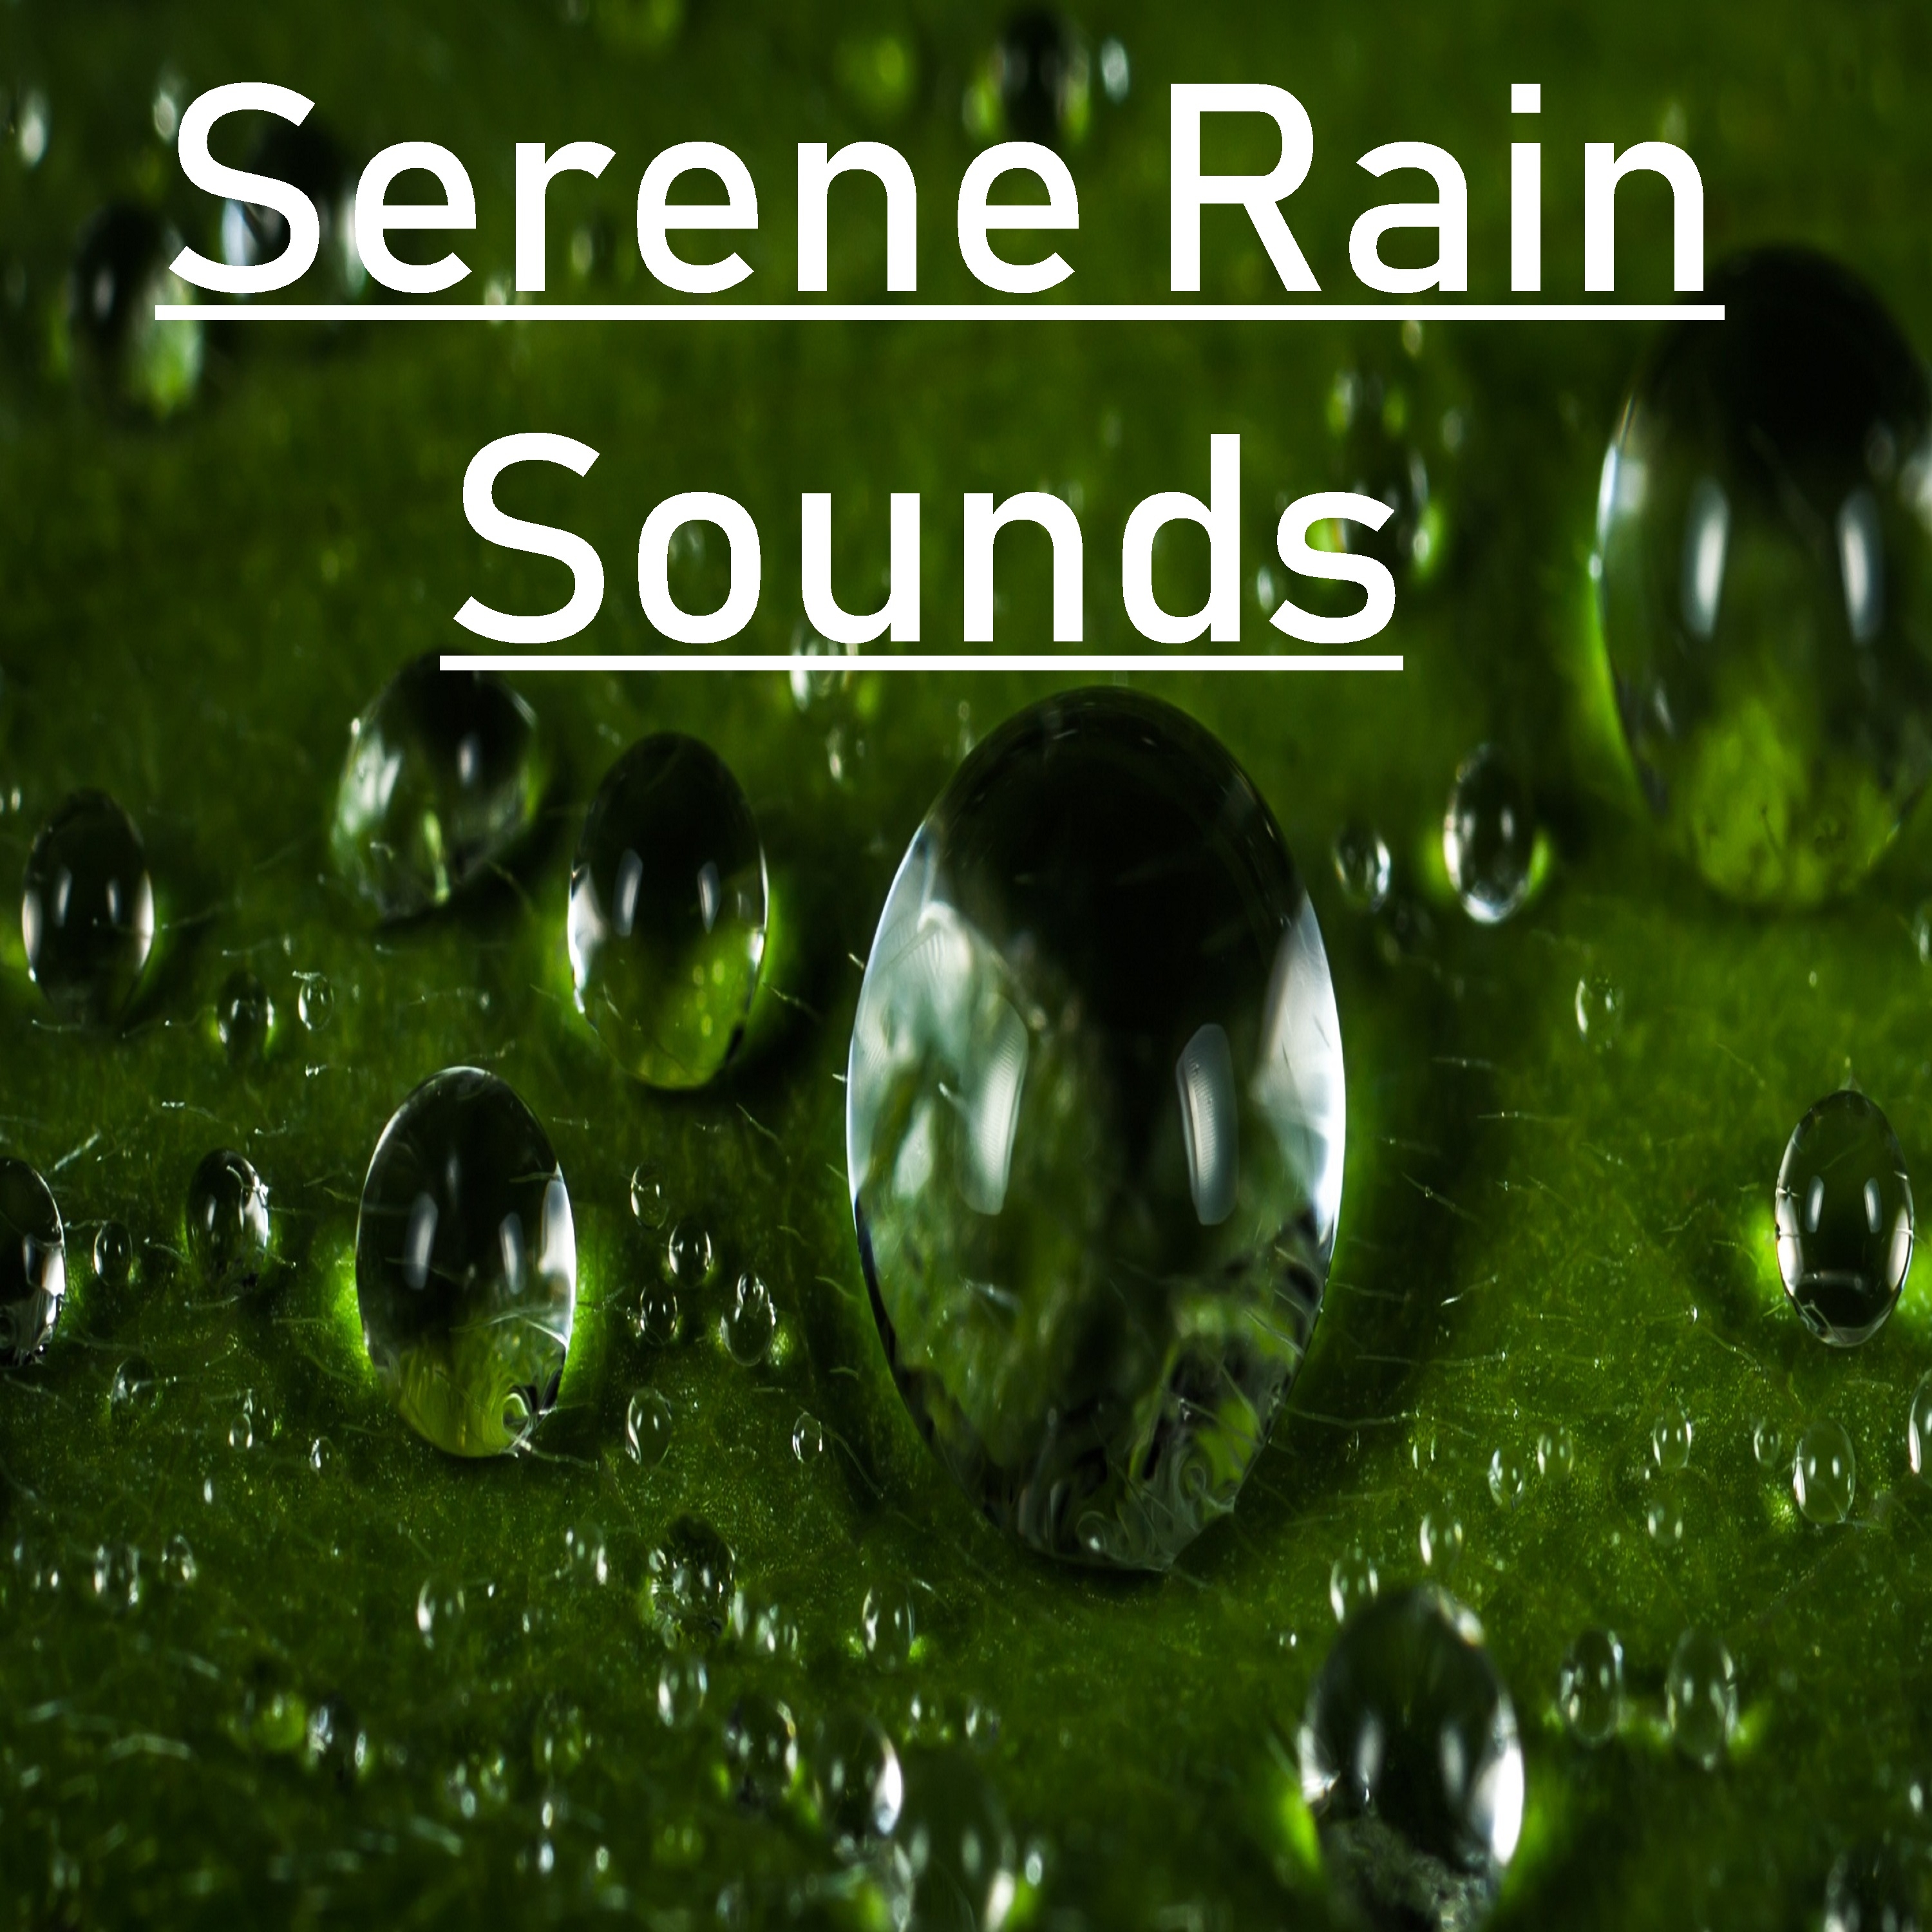 21 Serene Rain Sounds - Peaceful Sleep or Yoga Practice